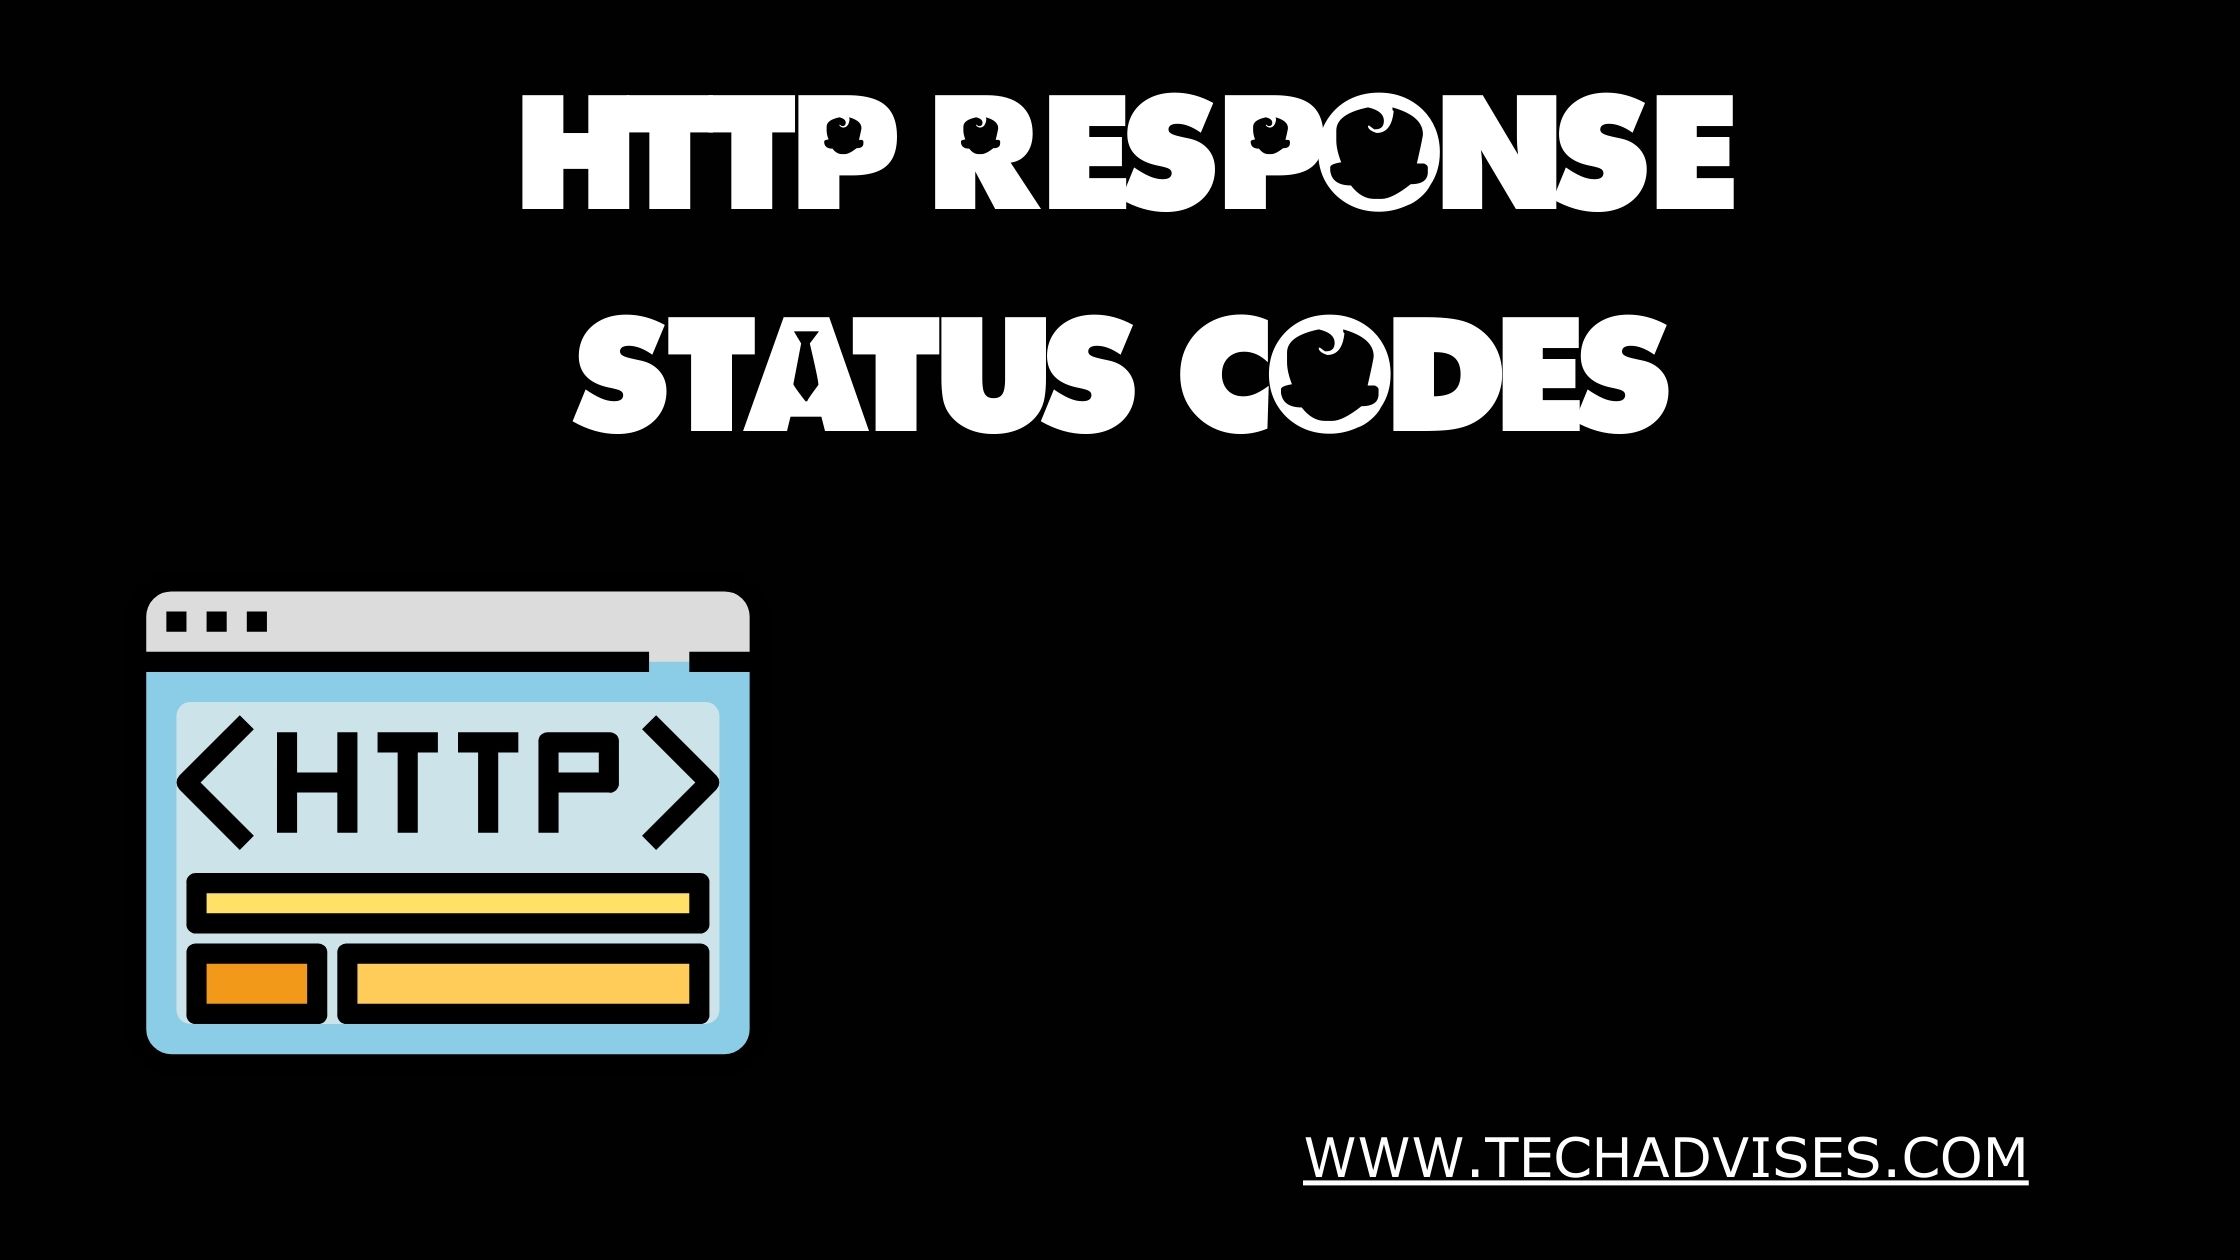 http response status codes